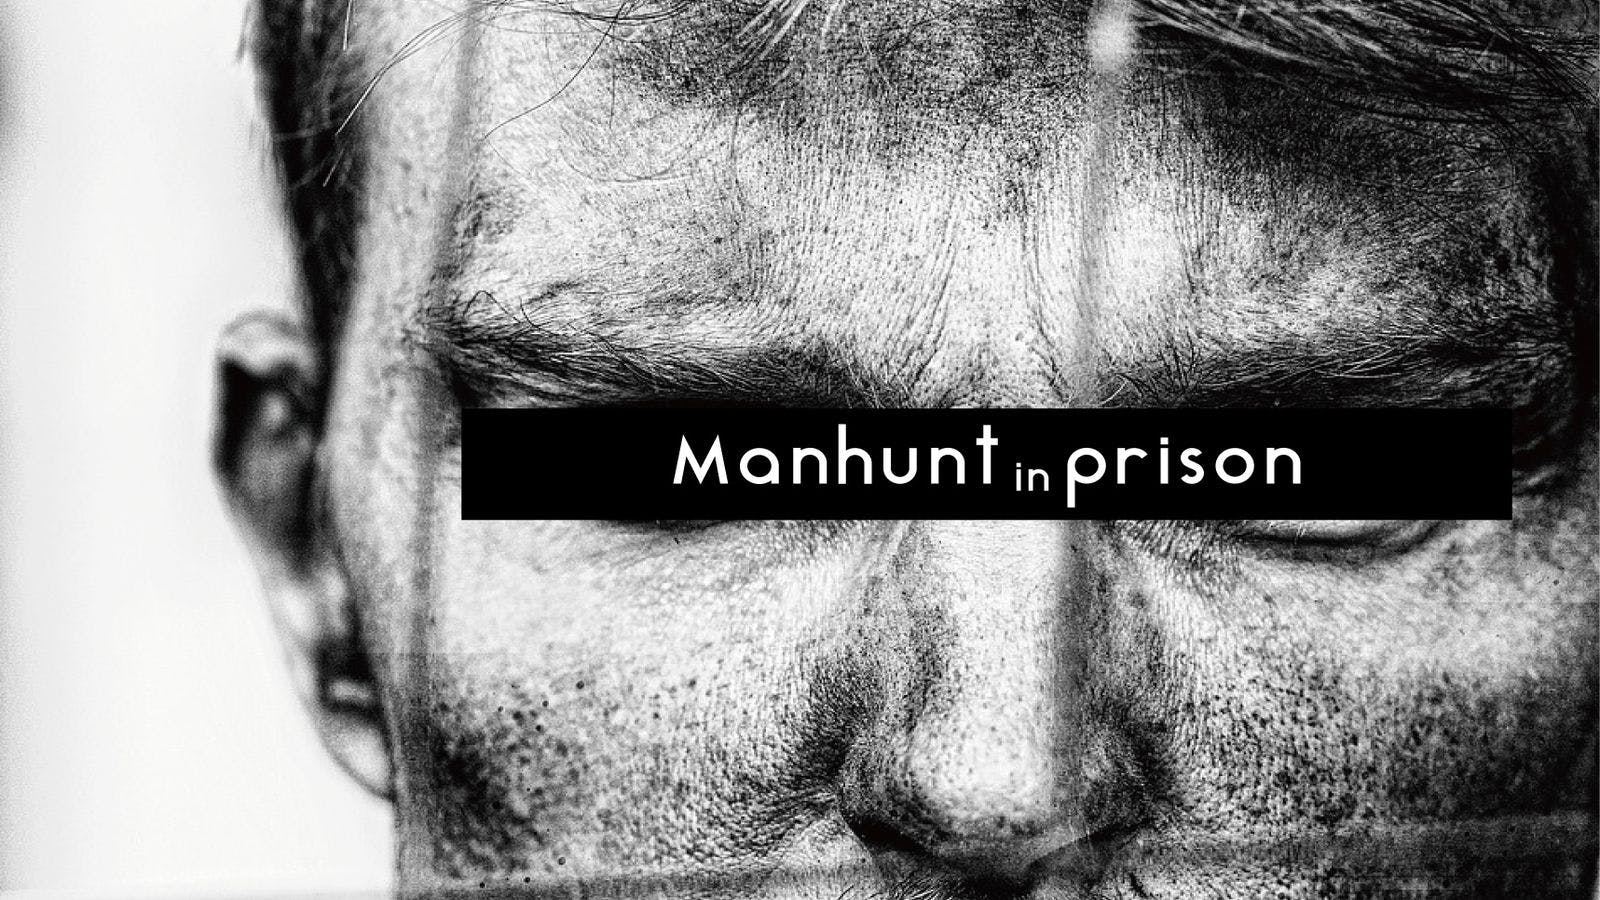 Manhunt in prison